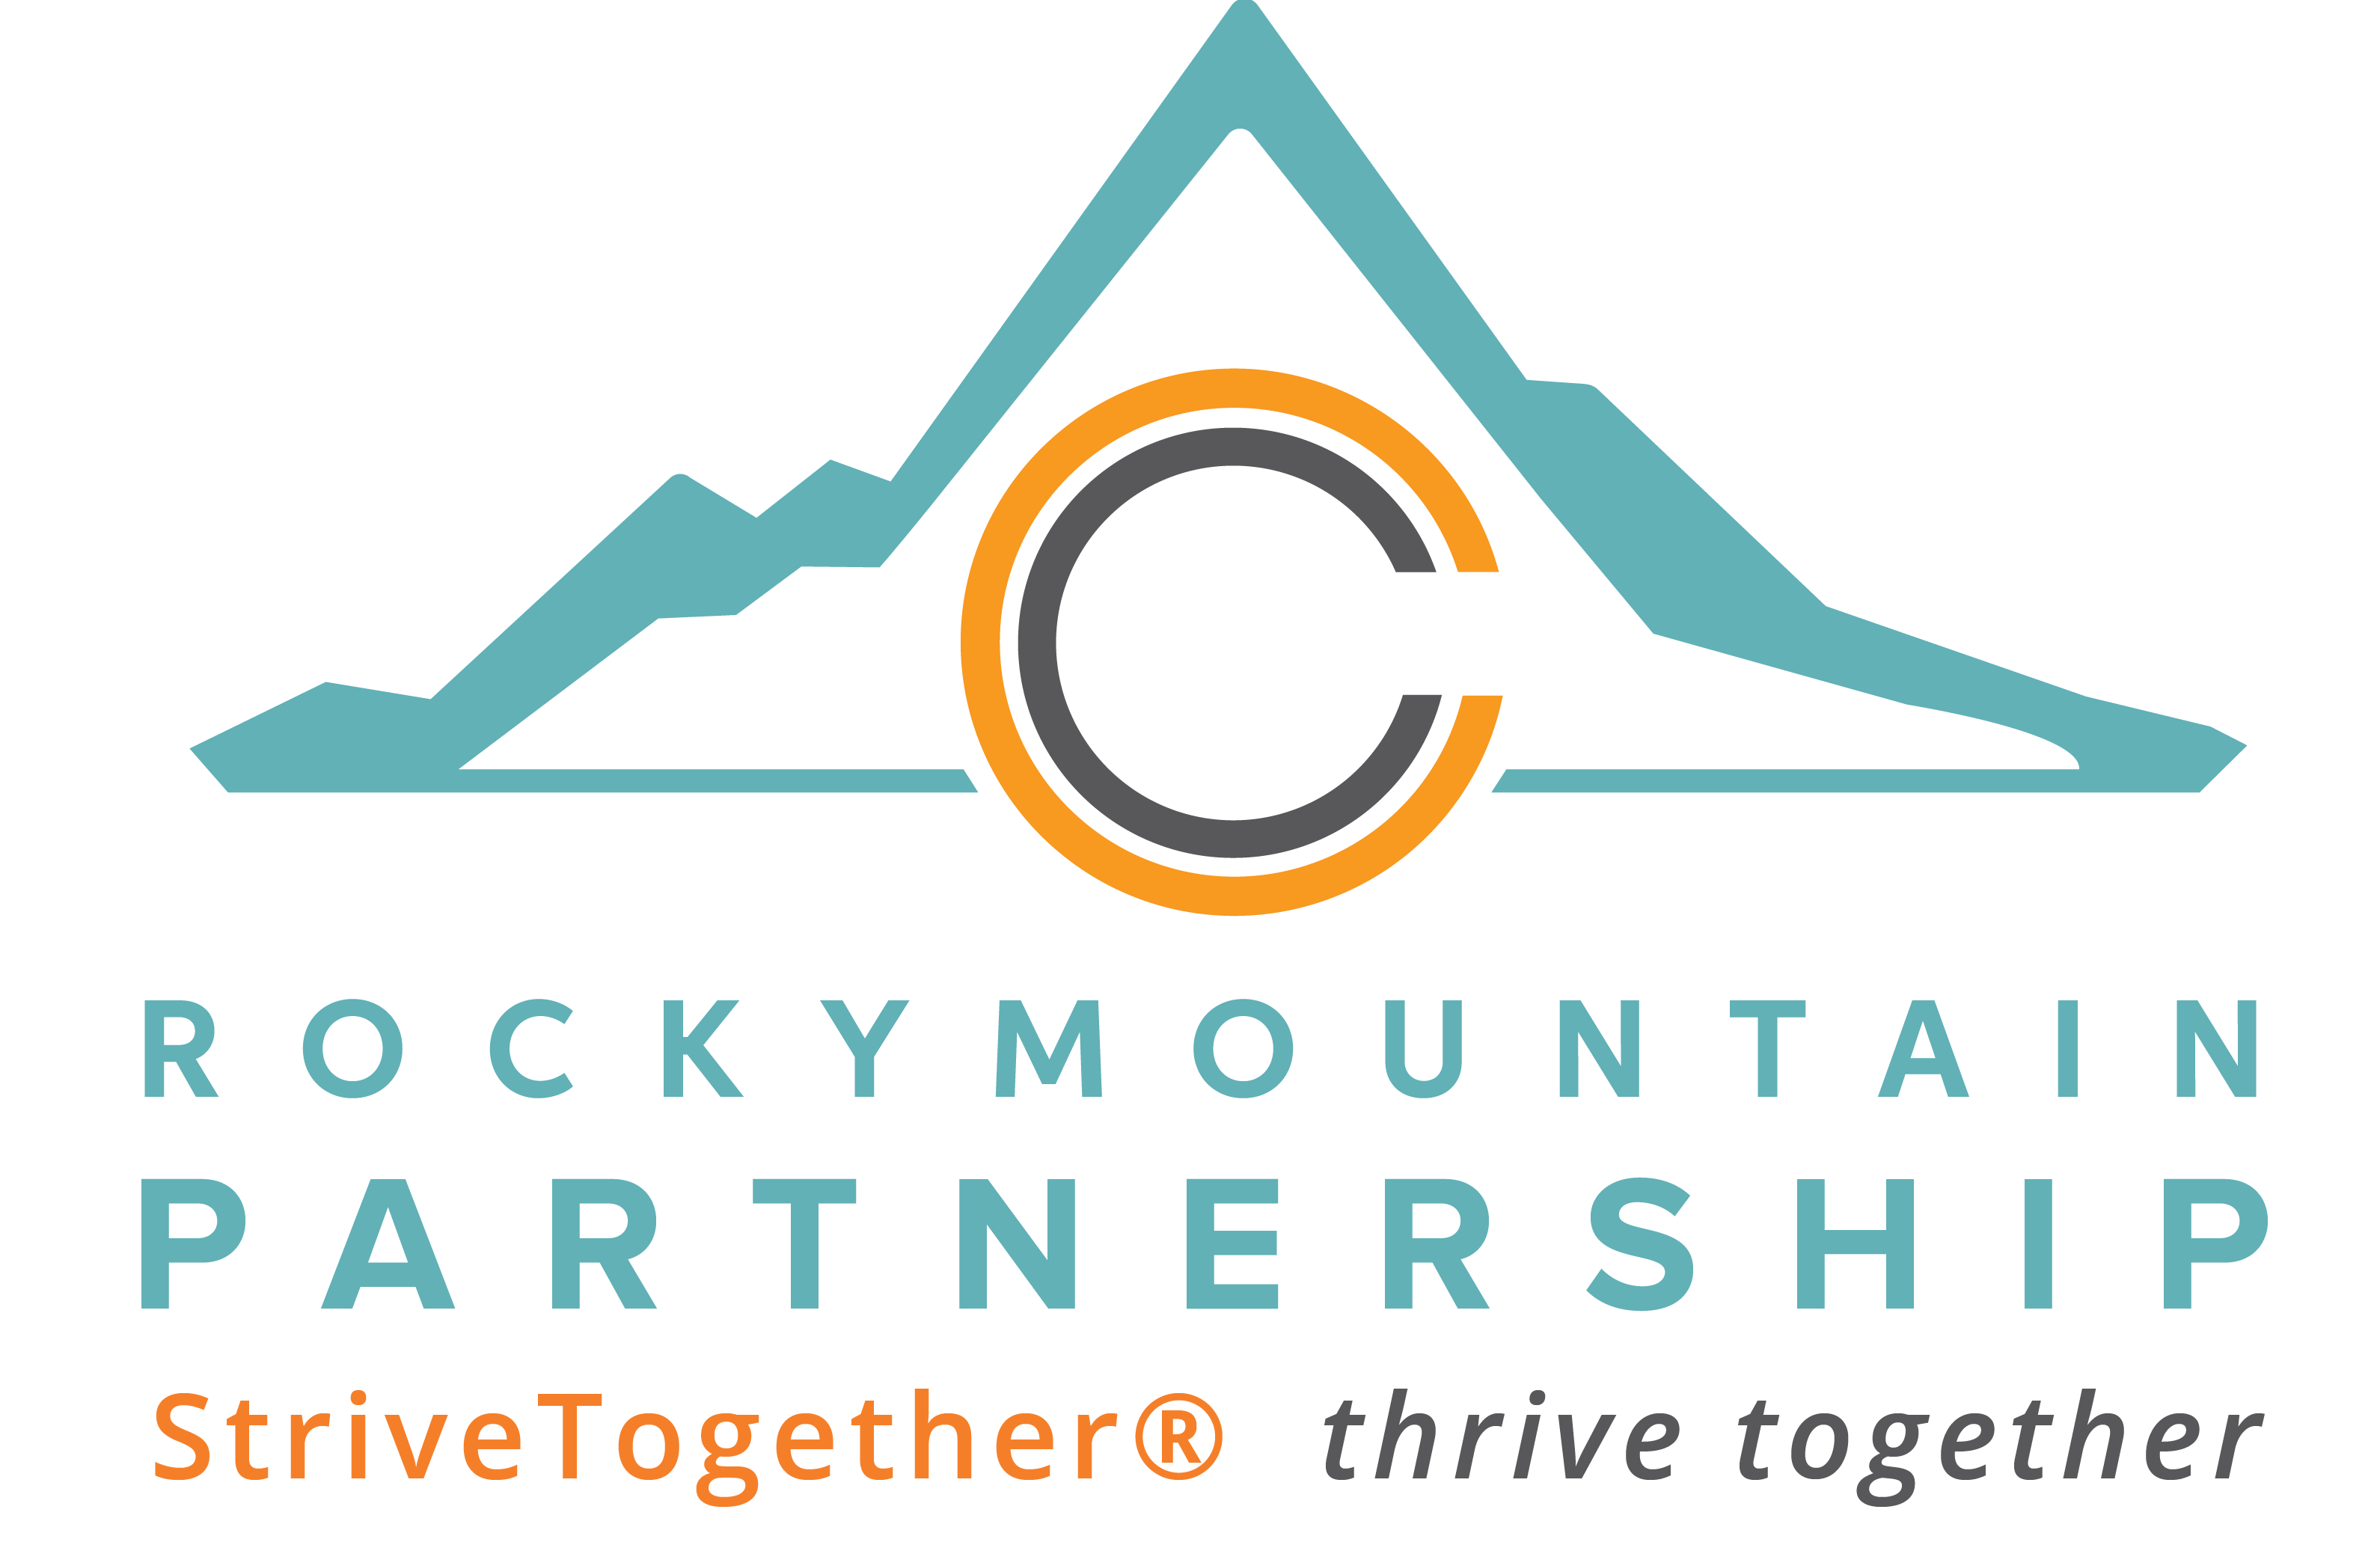 Rocky Mountain Partnership